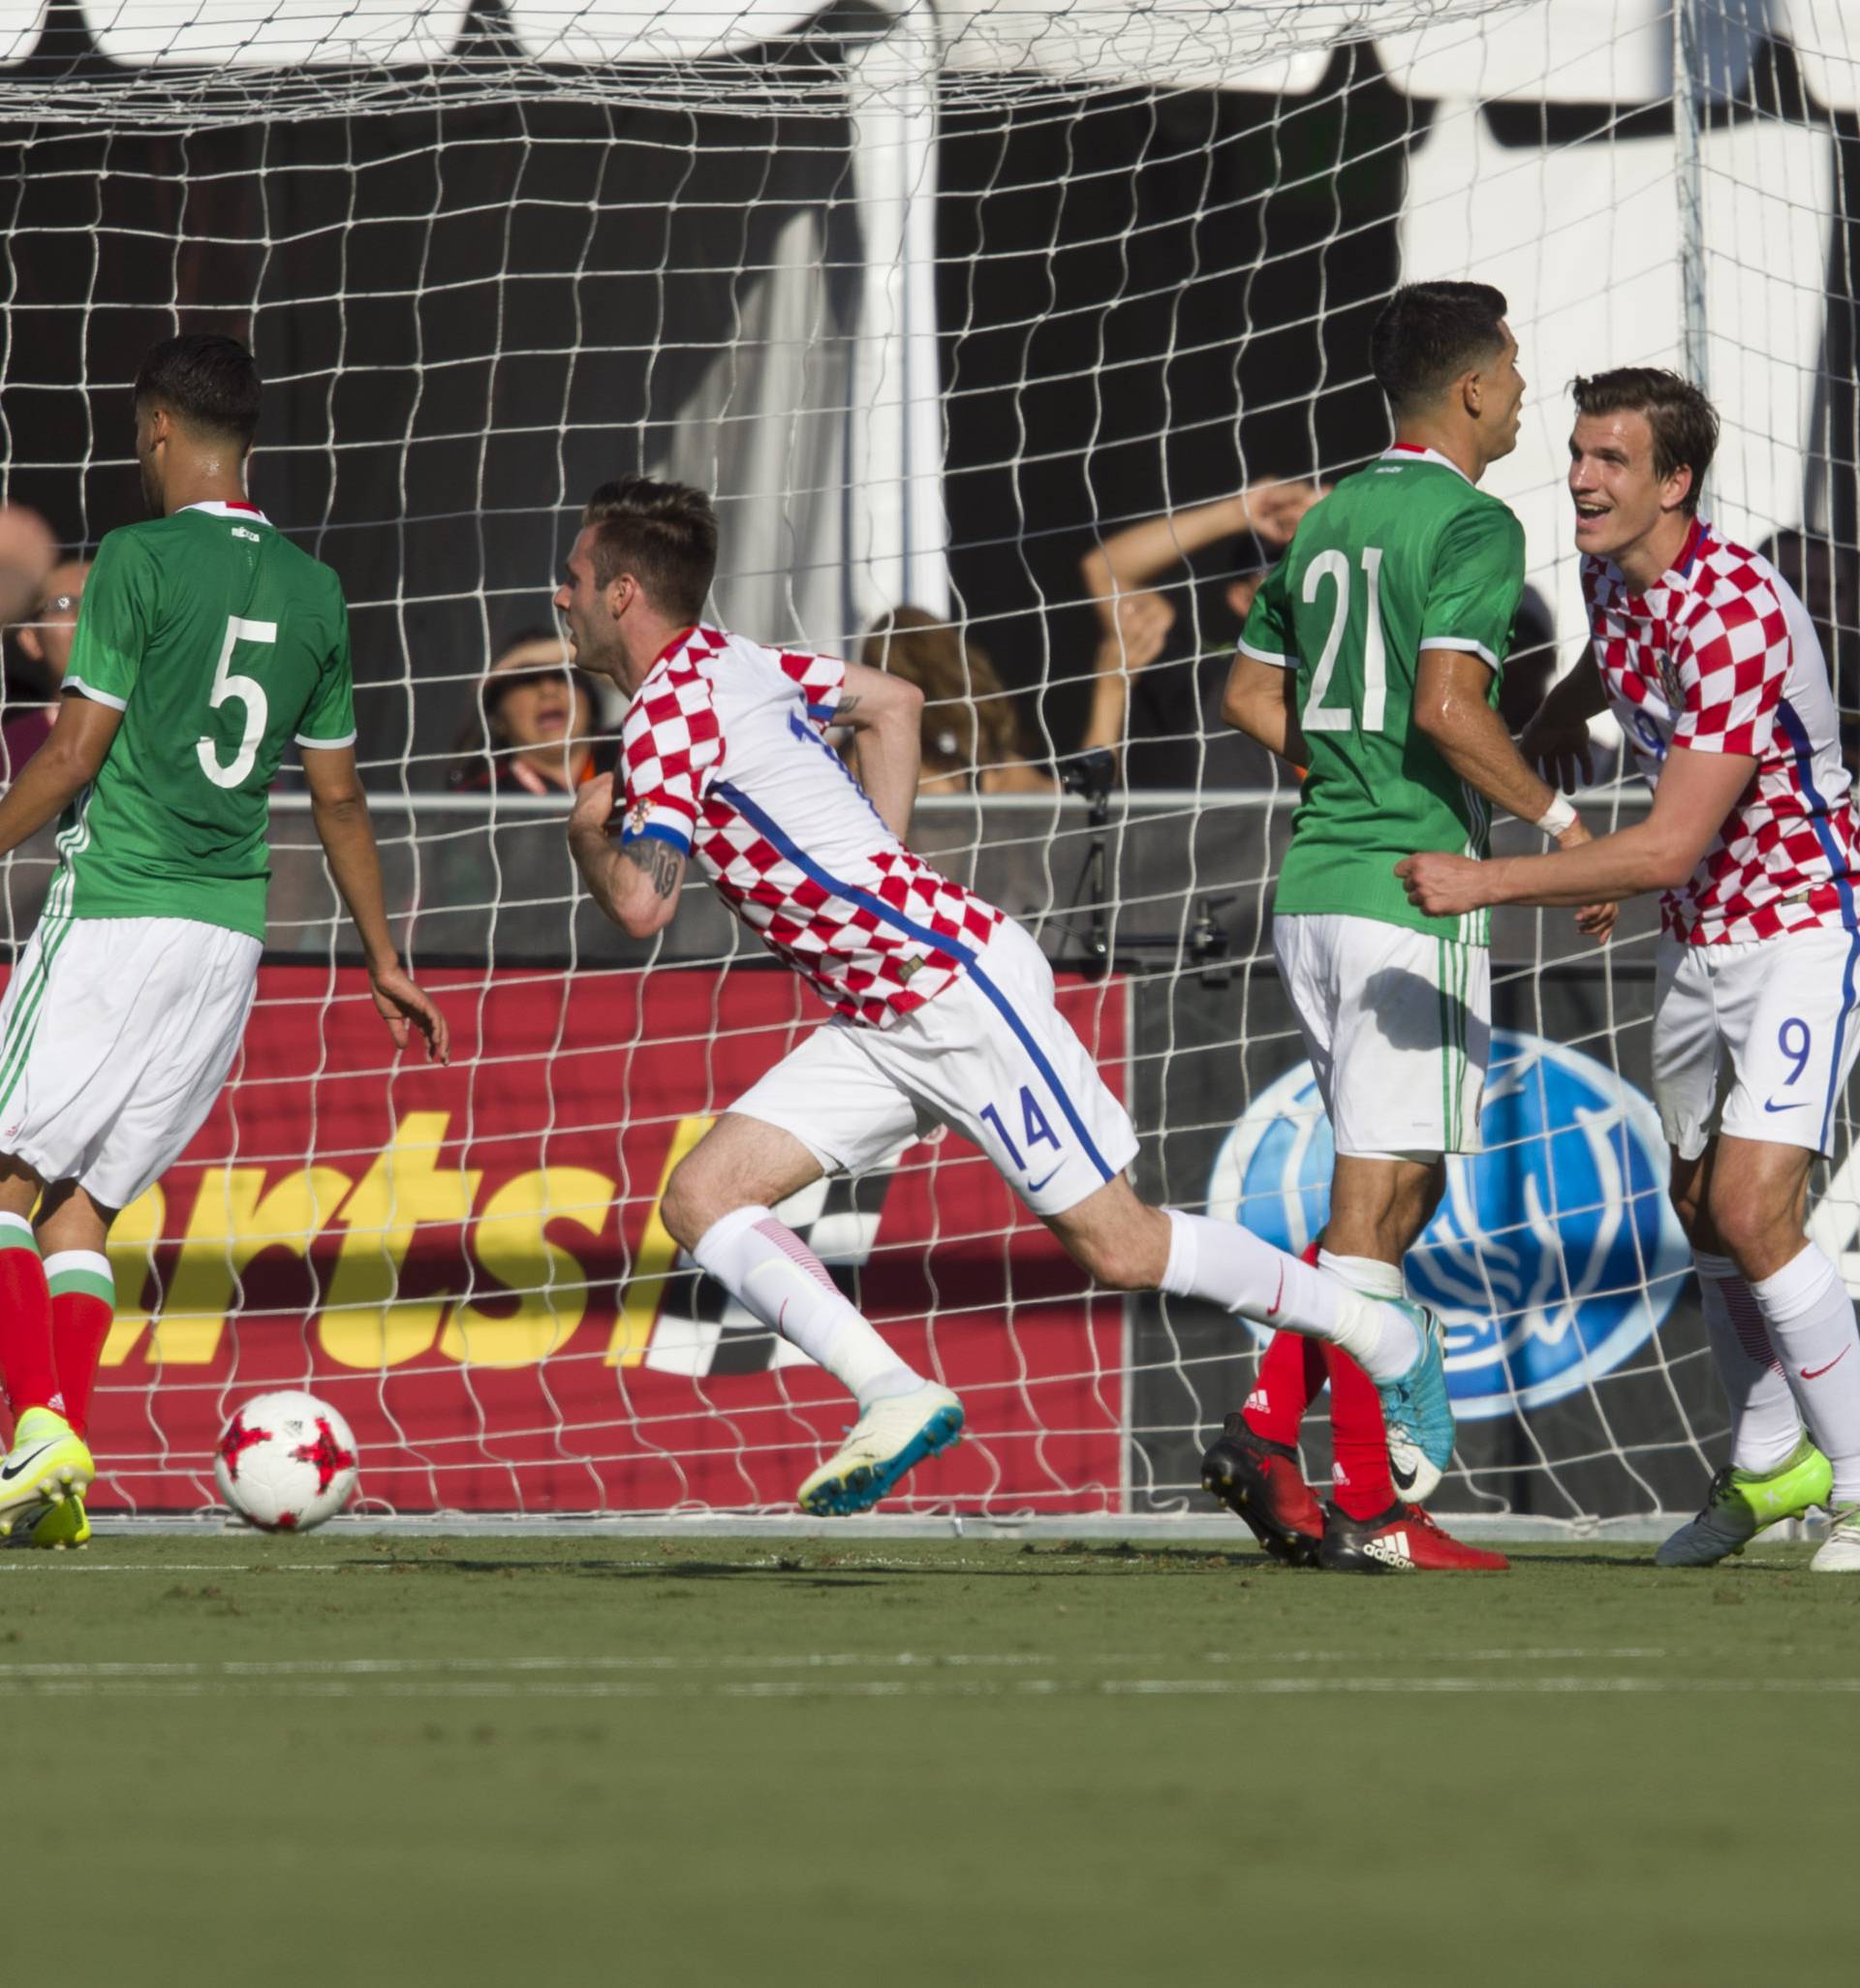 Soccer: Croatia vs Mexico